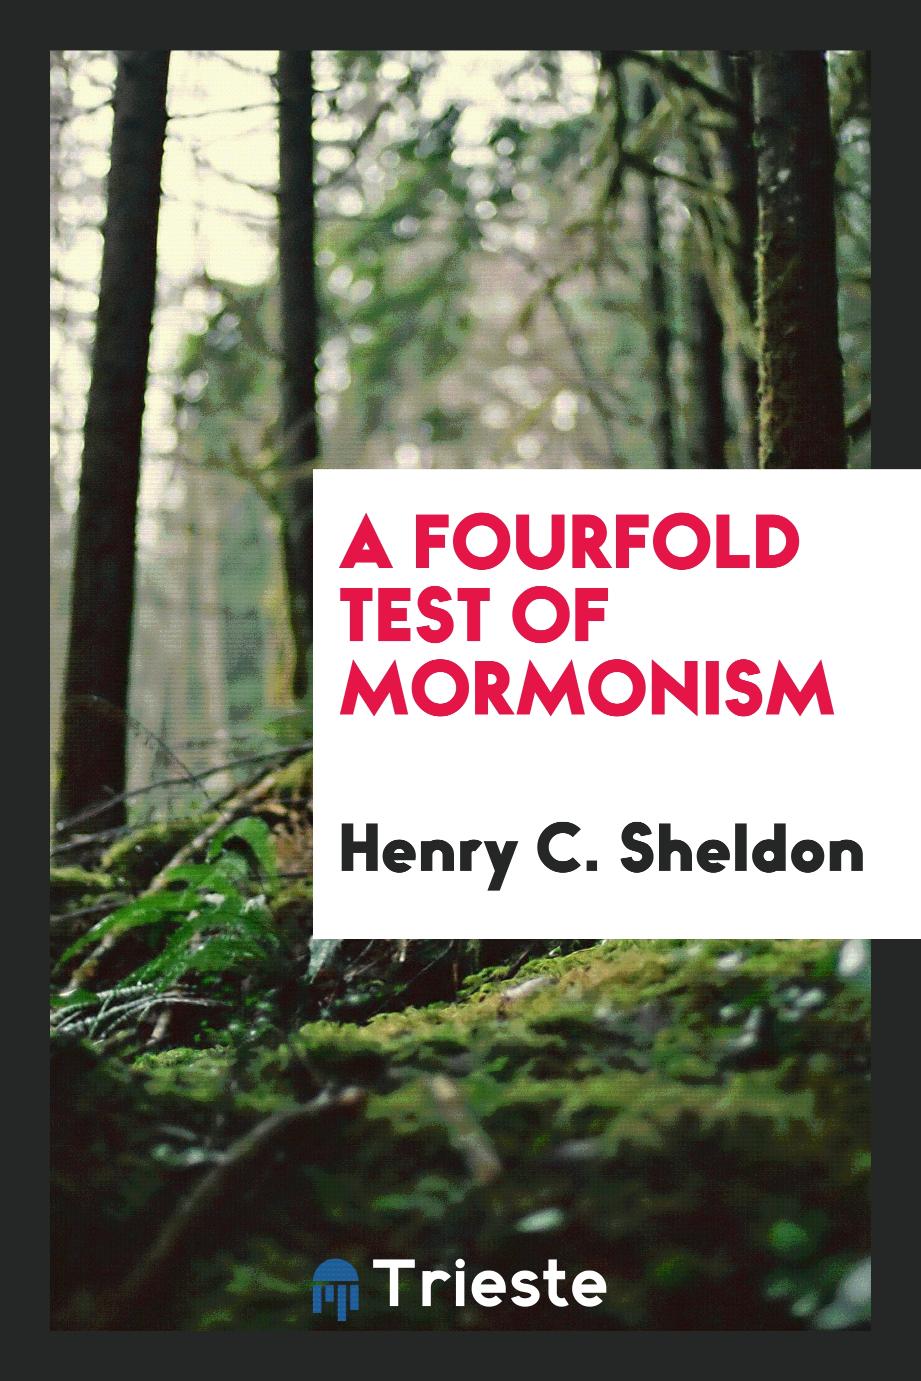 A Fourfold Test of Mormonism